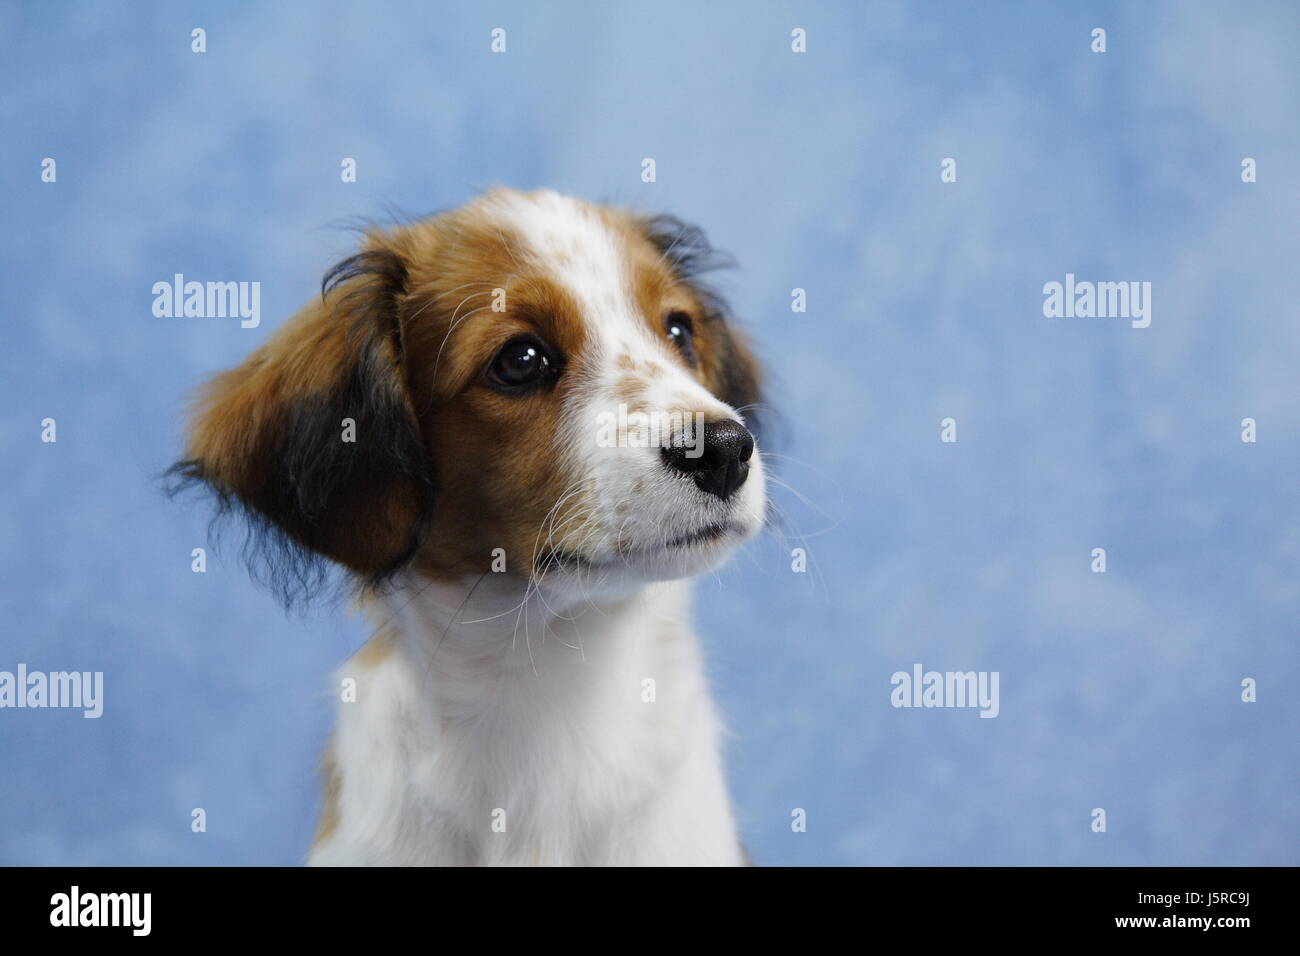 portrait dog studio puppy lap dog lapdog spaniel cute kooikerhondje sss Stock Photo